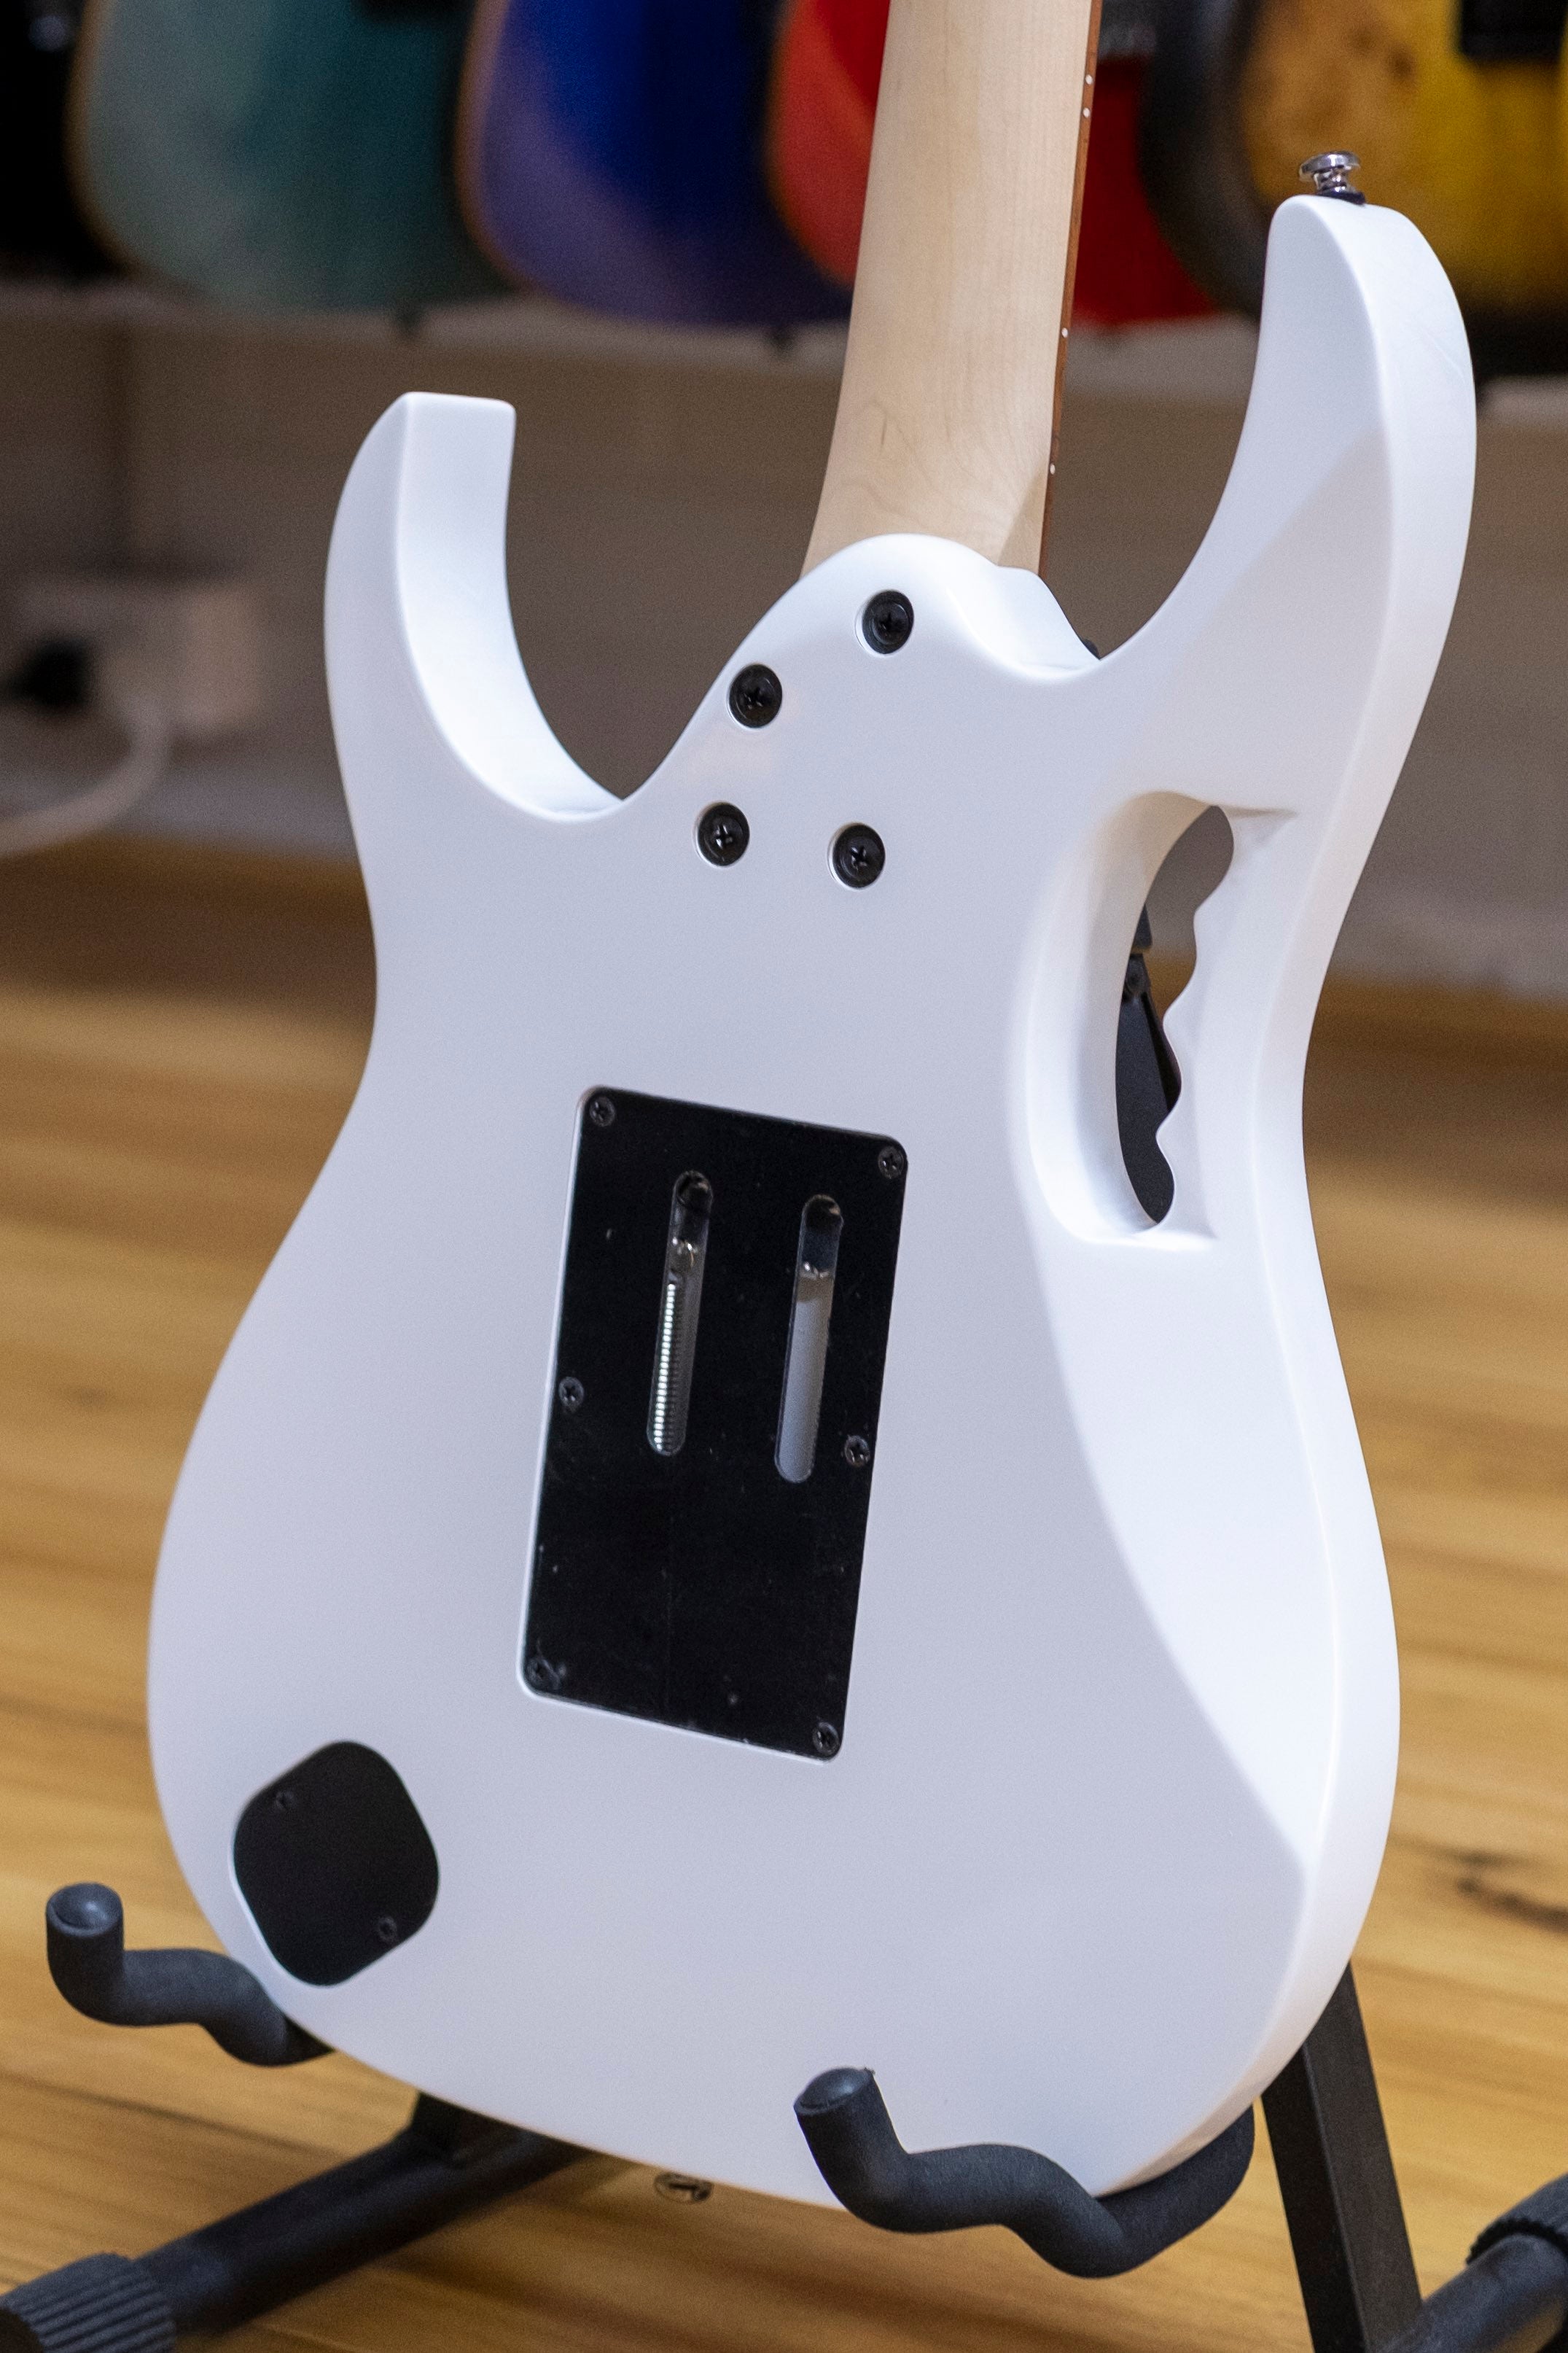 Ibanez Jem Jr Steve Vai Signature Electric Guitar (White)